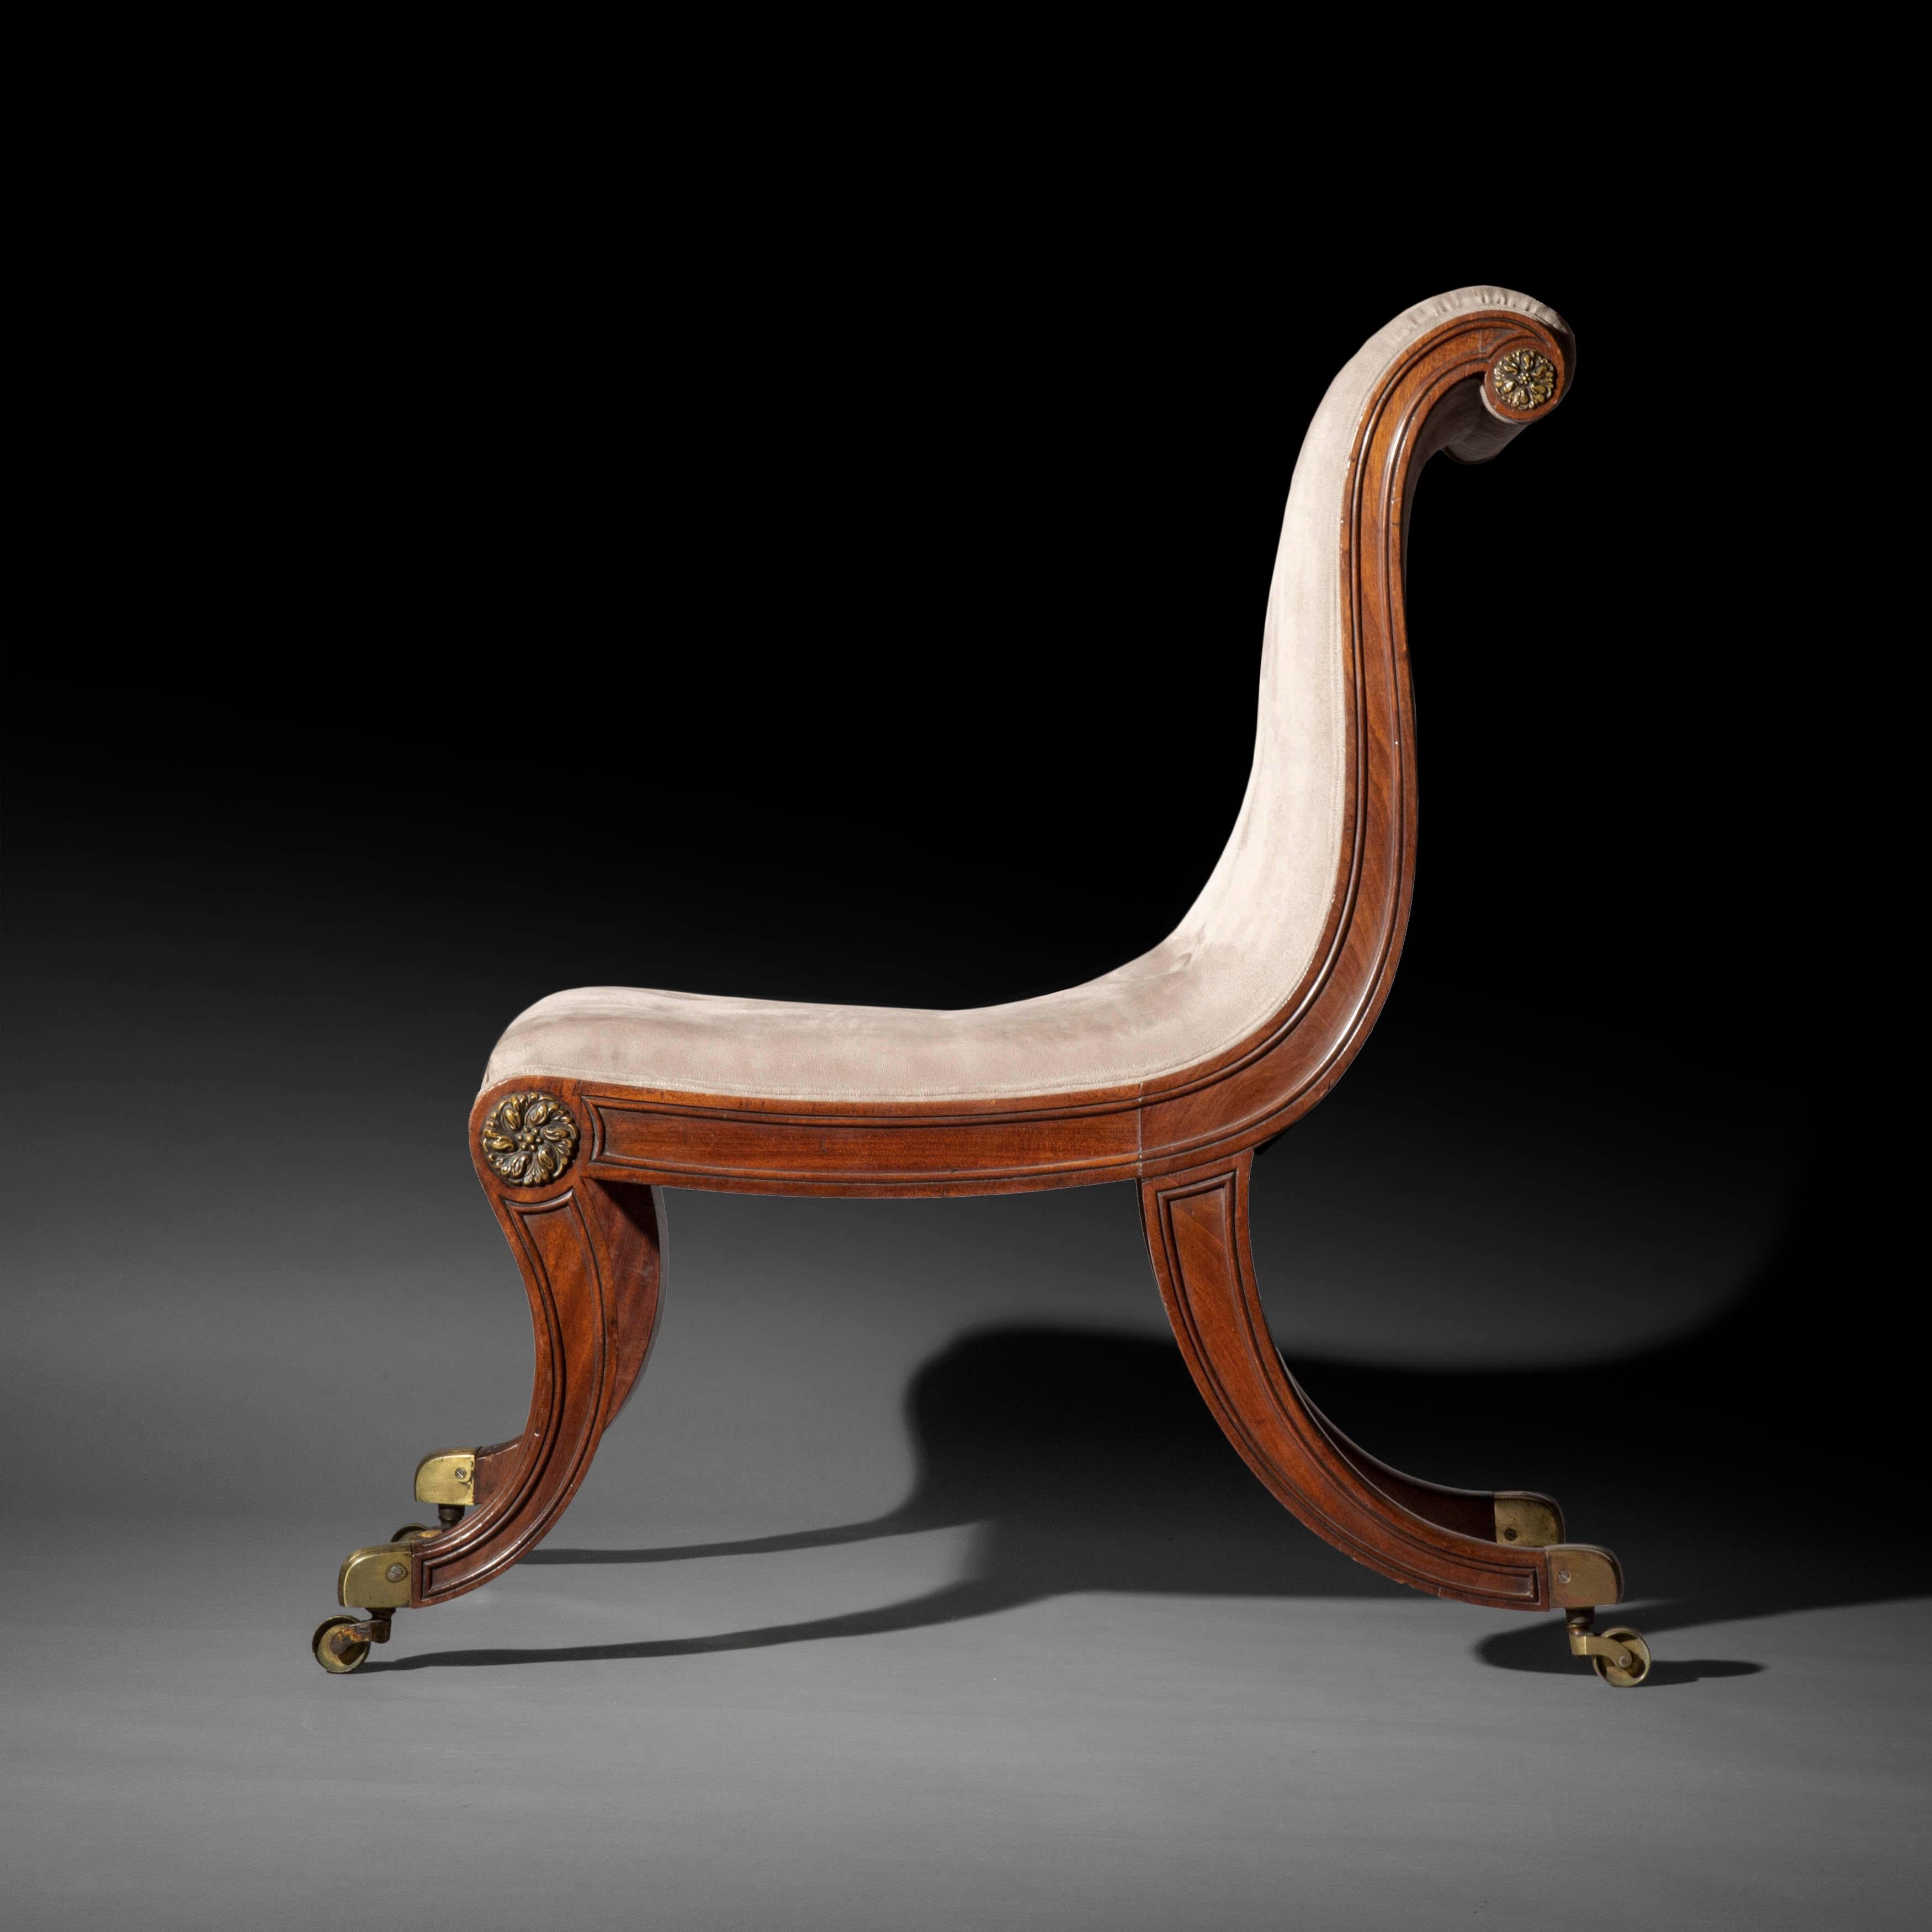 English Pair of Antique Regency Klismos Chairs, Designed by Thomas Hope